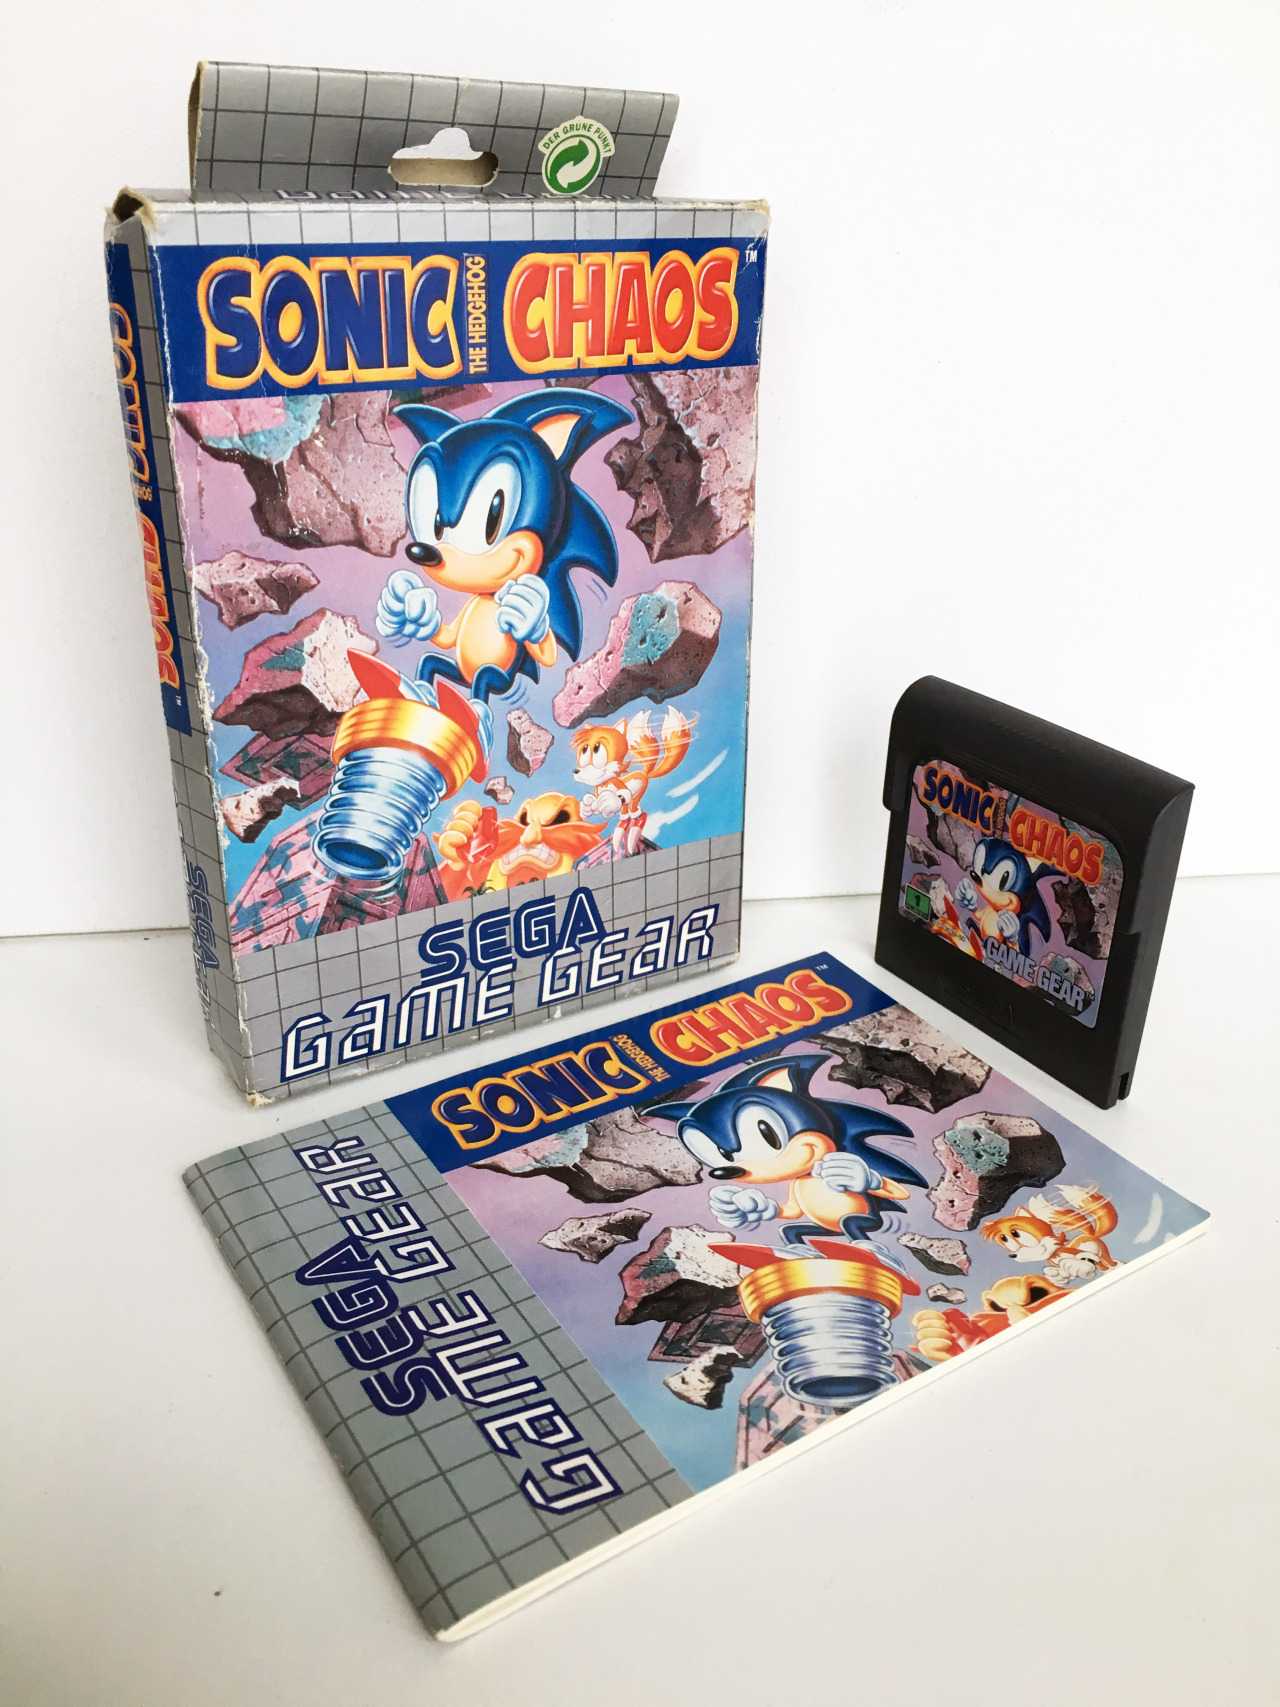 Sonic Chao : r/SonicTheHedgehog